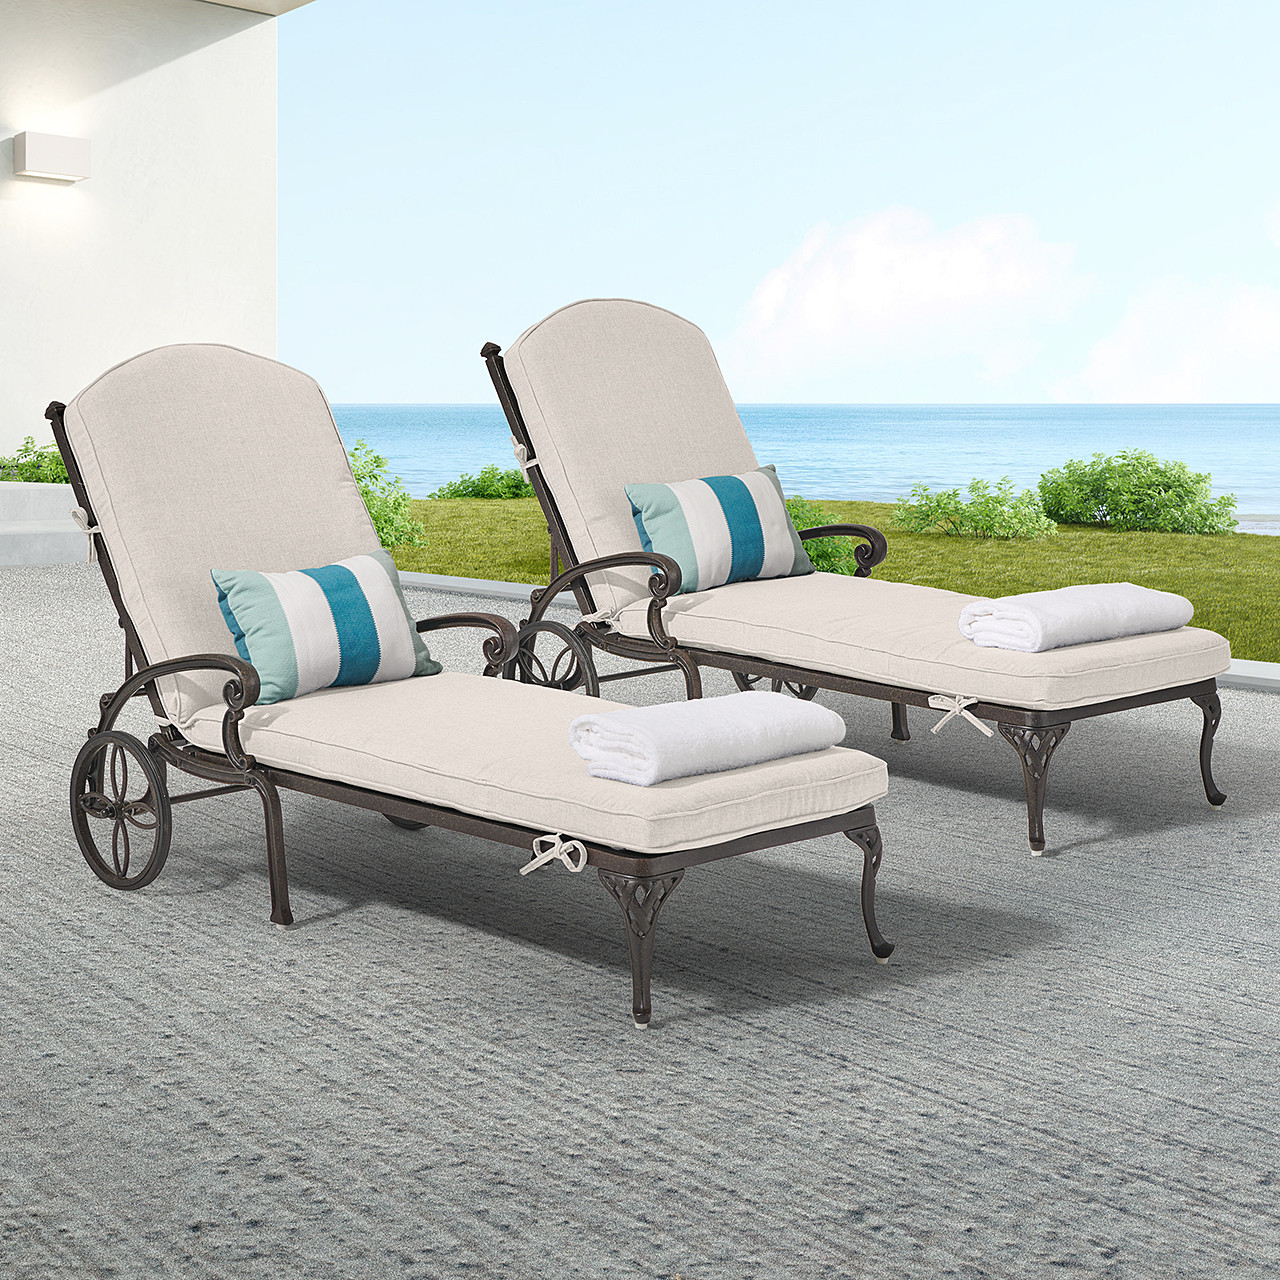 Naples Cast Aluminum with Cushions 2 Pc. Chaise Lounge Set